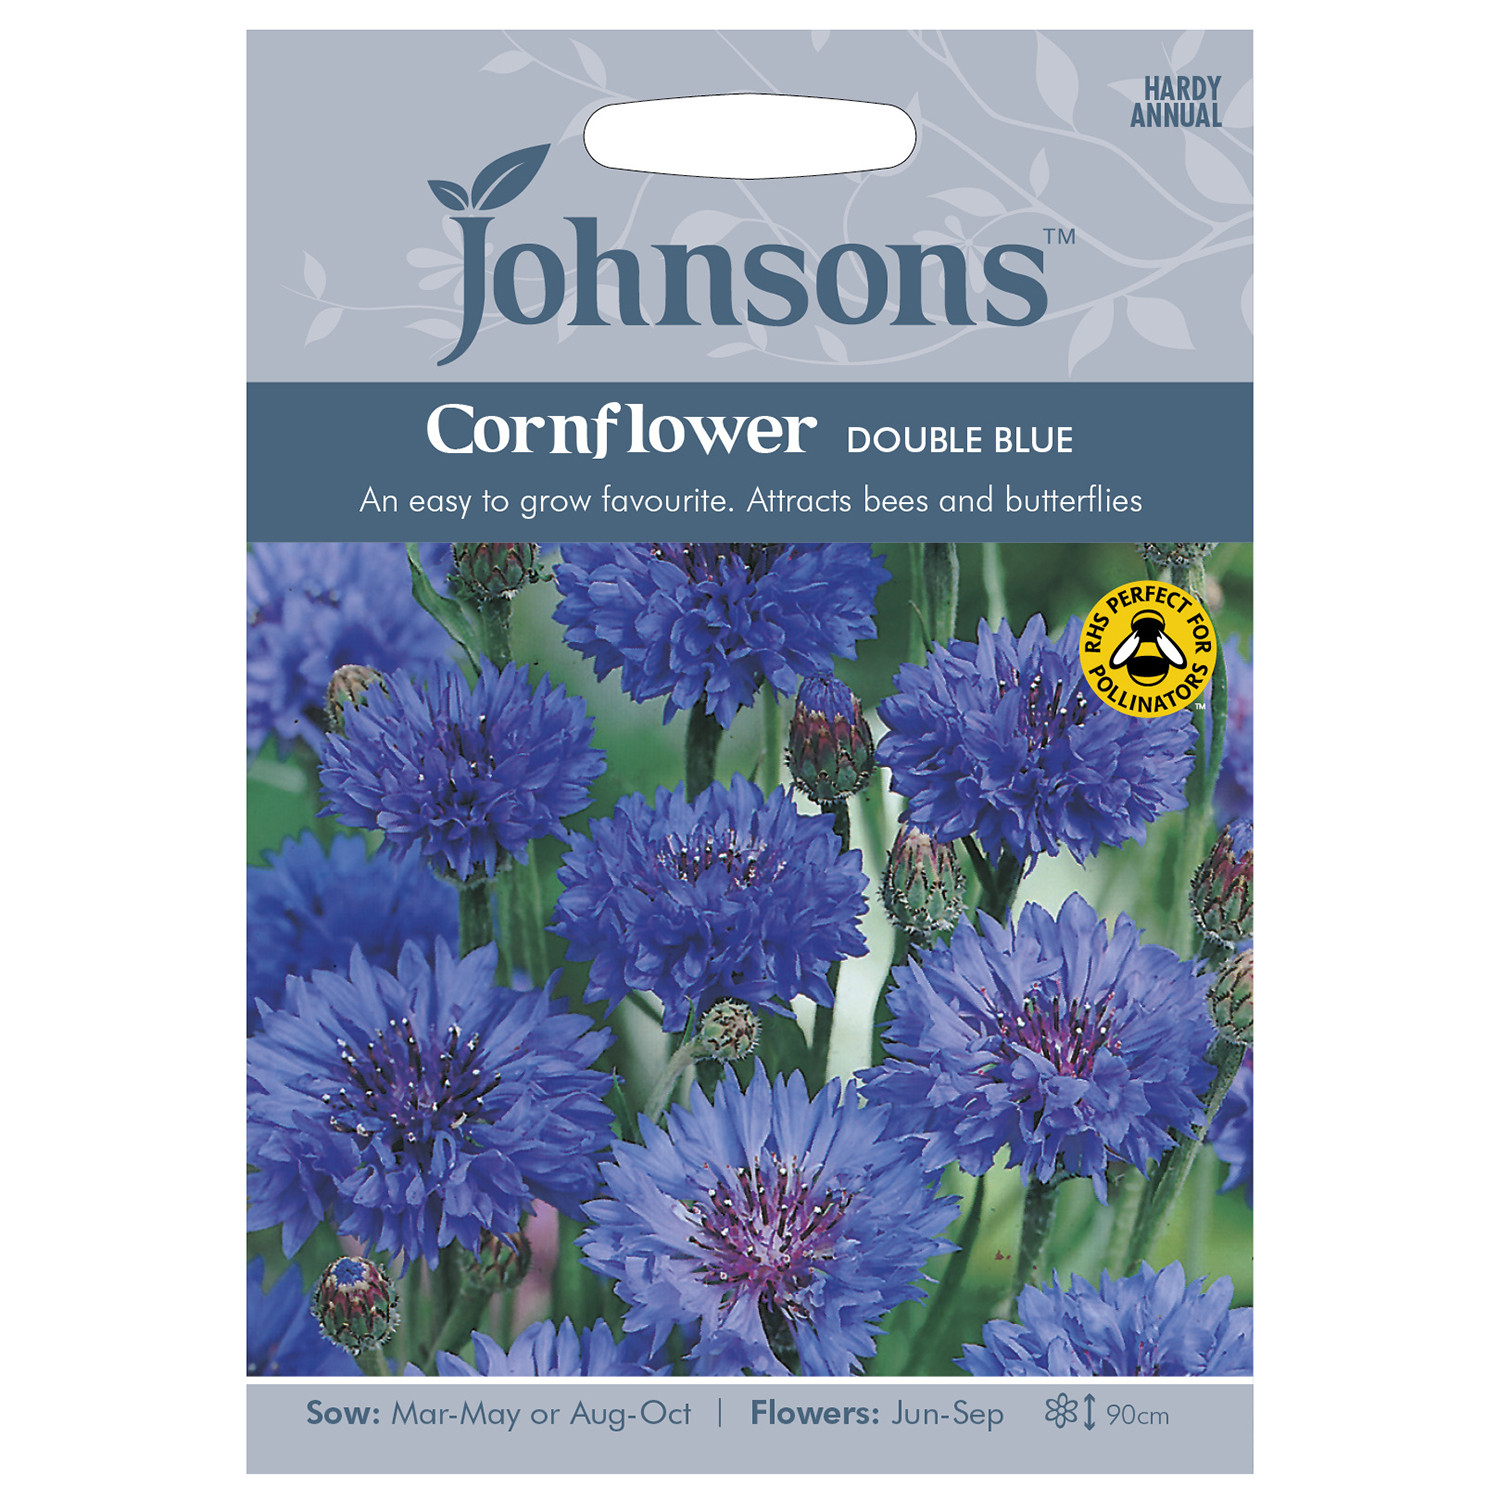 Johnsons Cornflower Double Blue Flower Seeds Image 2